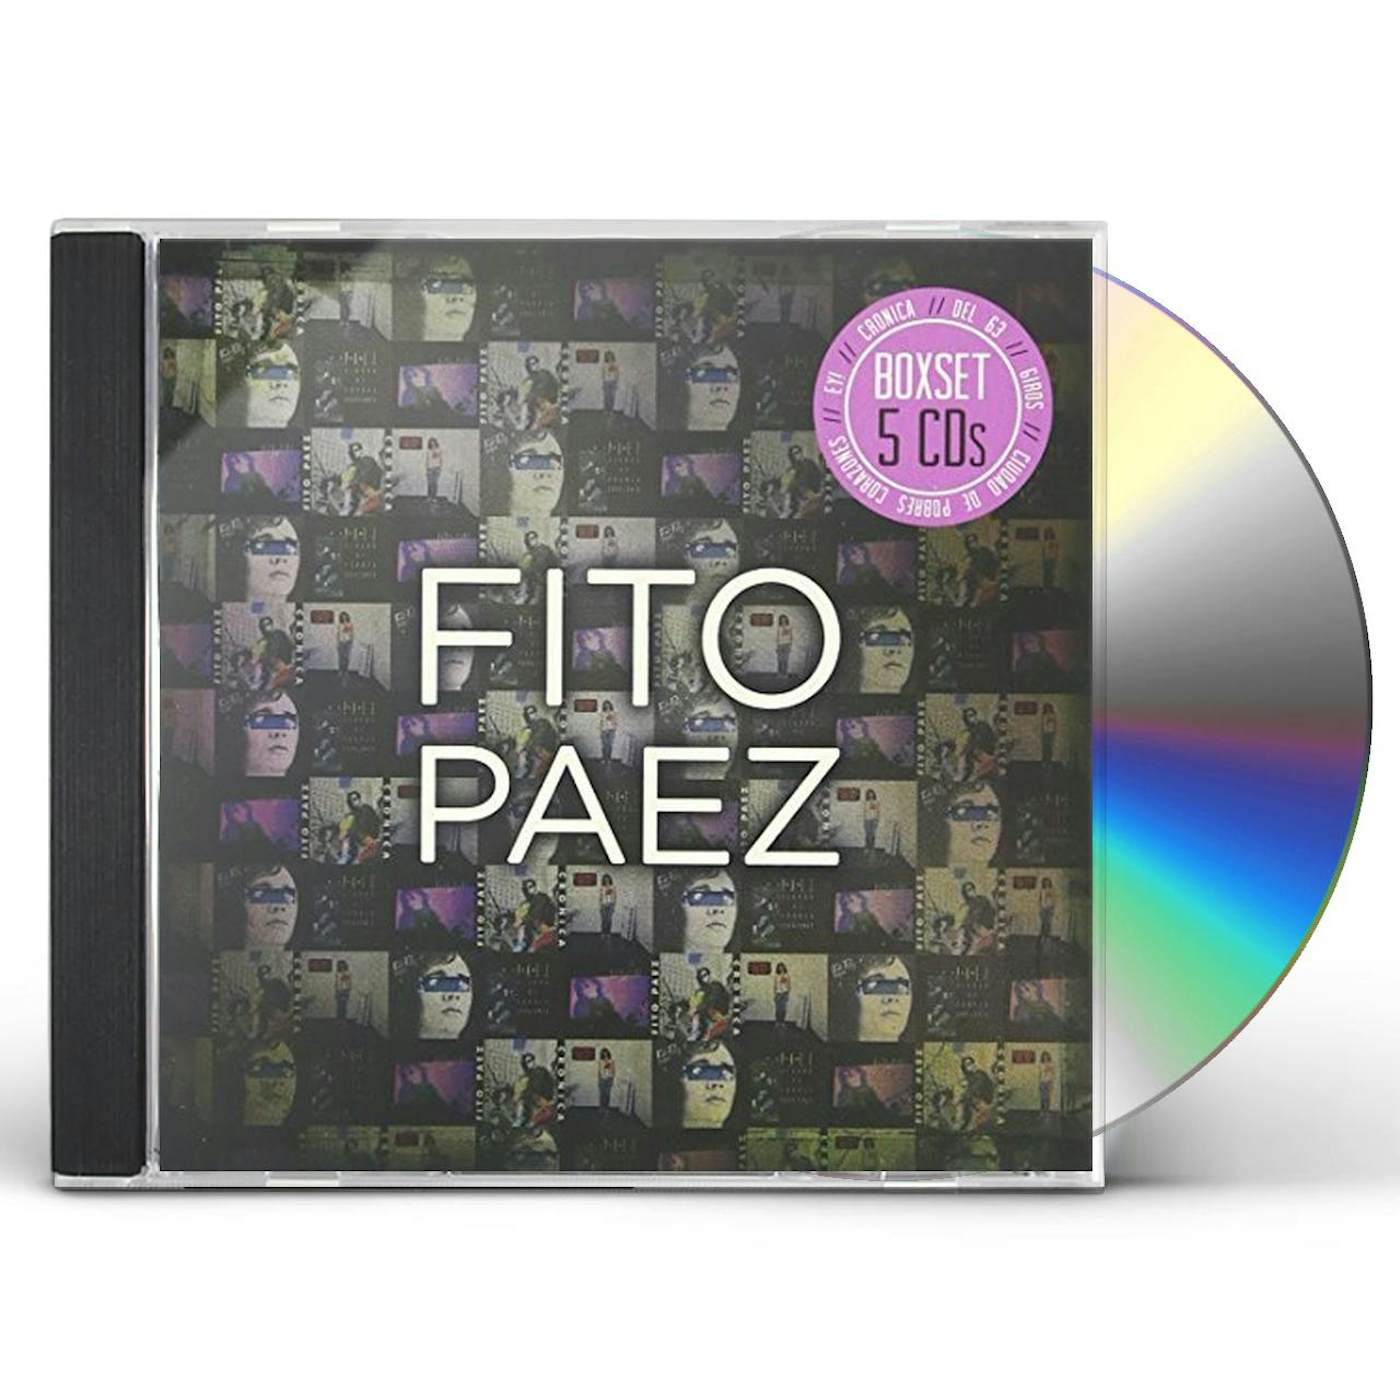 FITO PAEZ CD